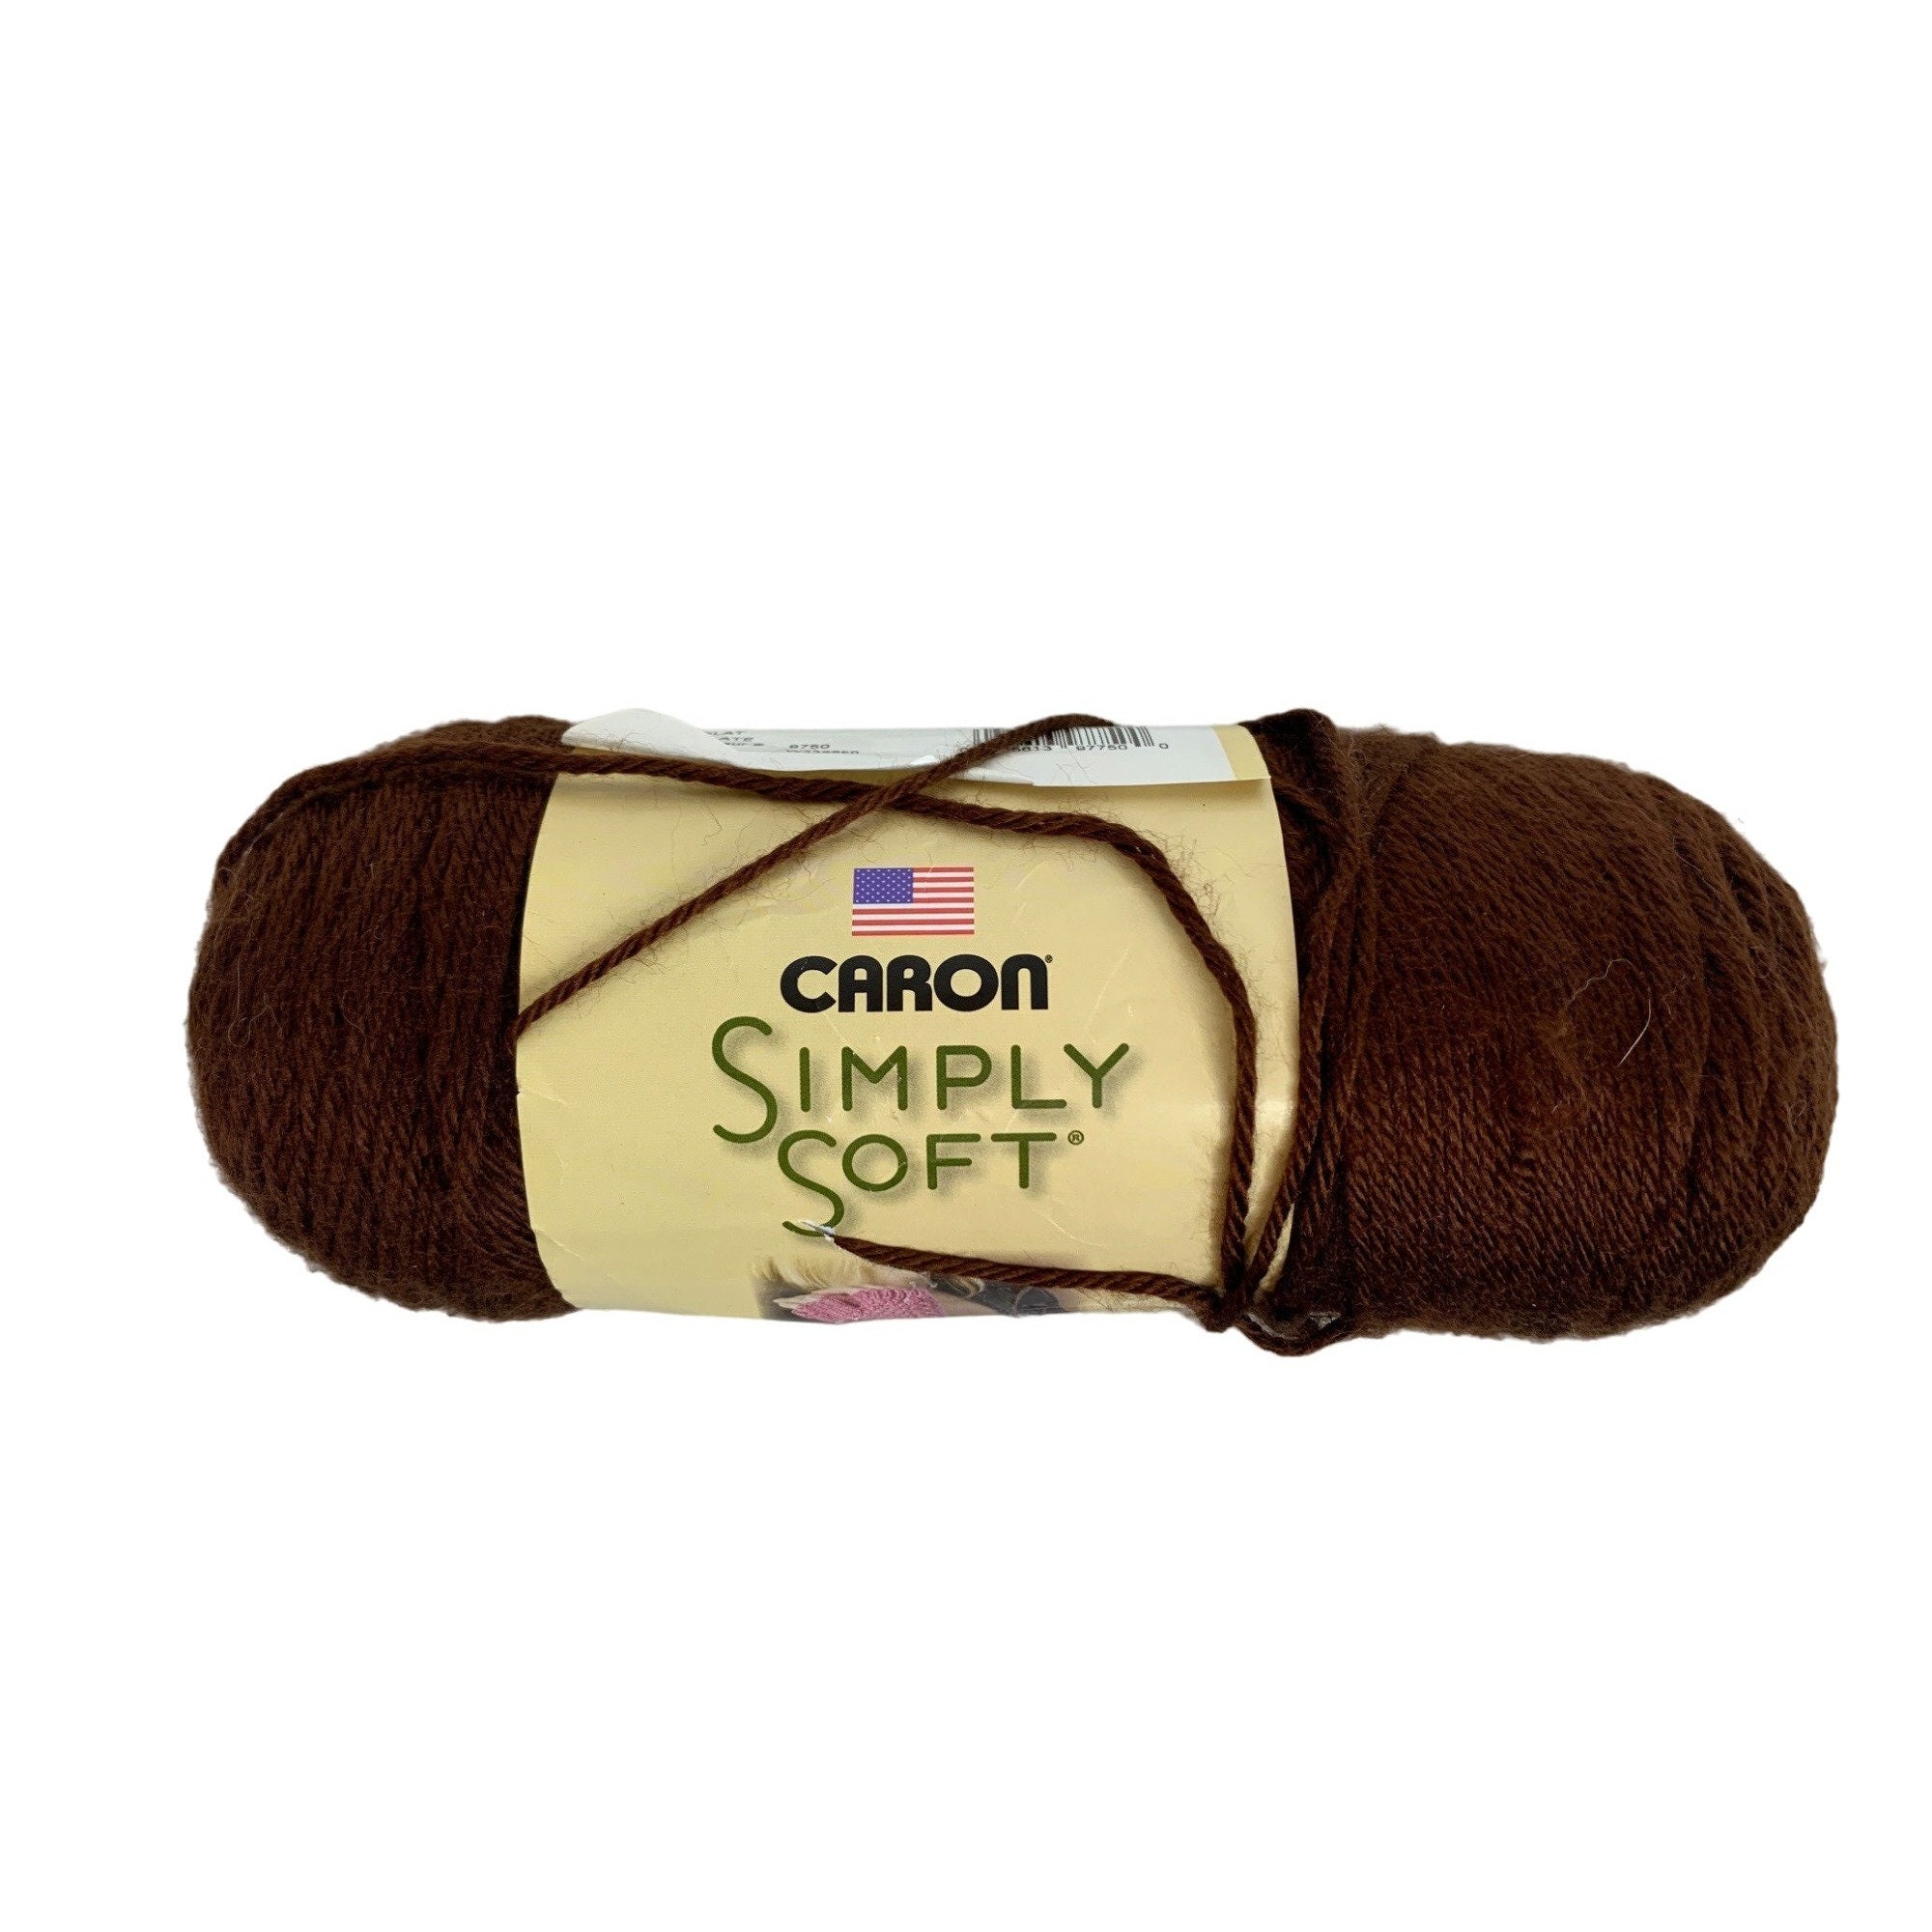 Lot of 2 Caron Simply Soft Bone (tan) Yarn 6 oz Skeins Yarn New with label